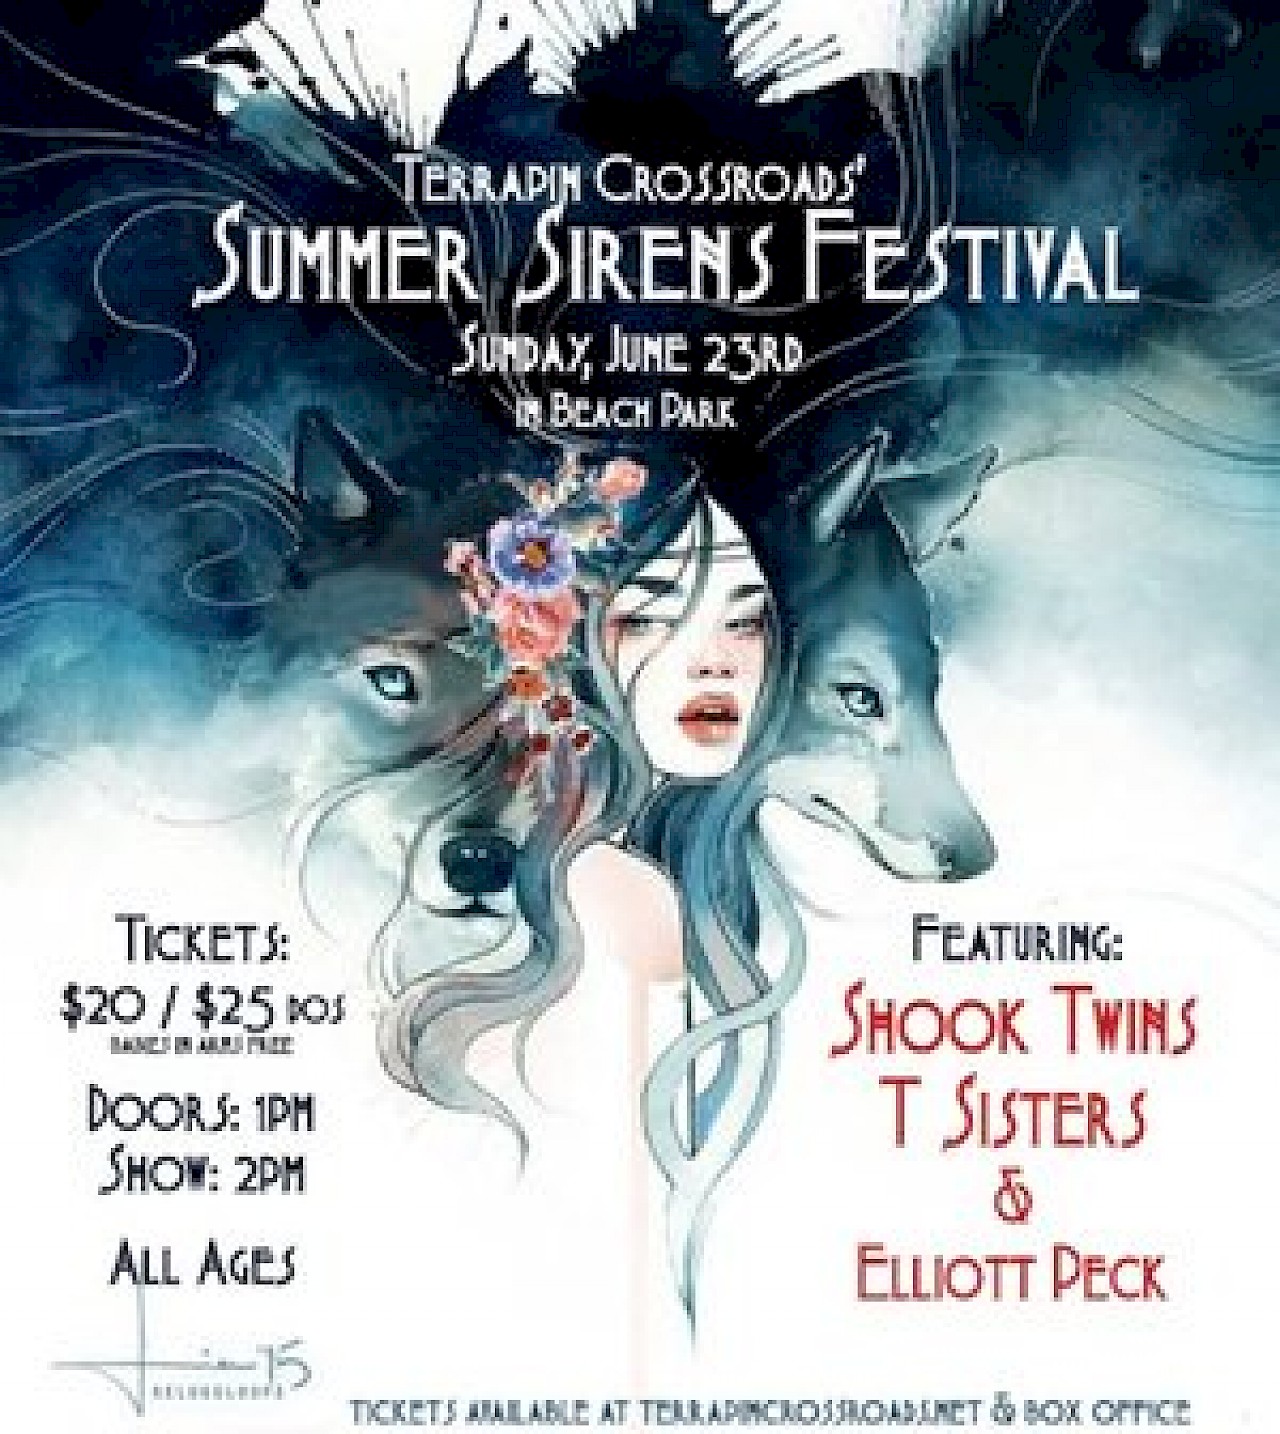 Terrapin Crossroads Sirens Of Summer Festival Featuring Shook Twing T Sisters Elliott Peck June 2019 Marin Convention Visitors Bureau